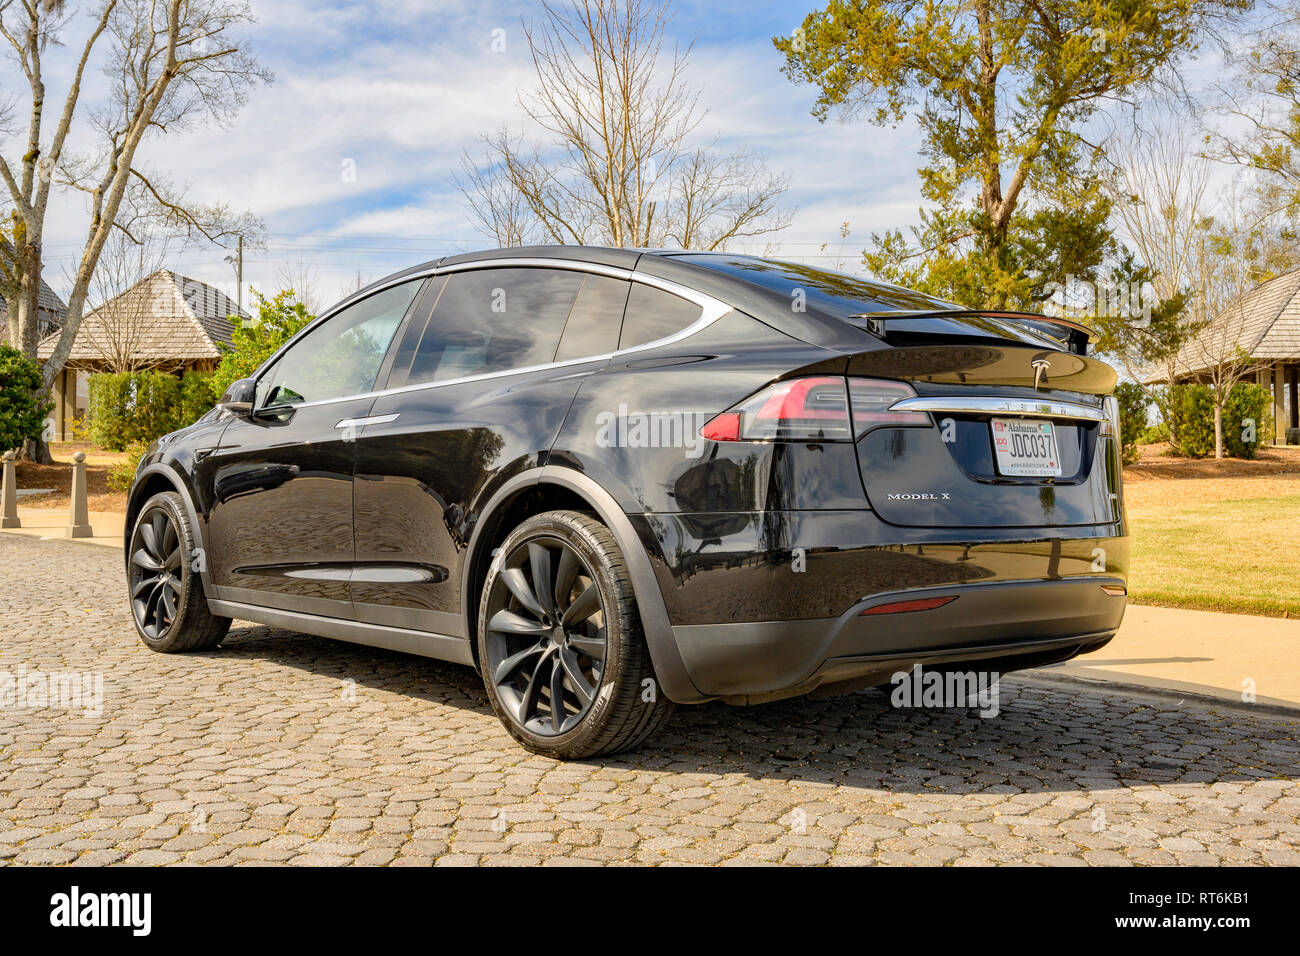 Black Tesla Model X electric car parked on a city street in Montgomery Alabama, USA. Stock Photo